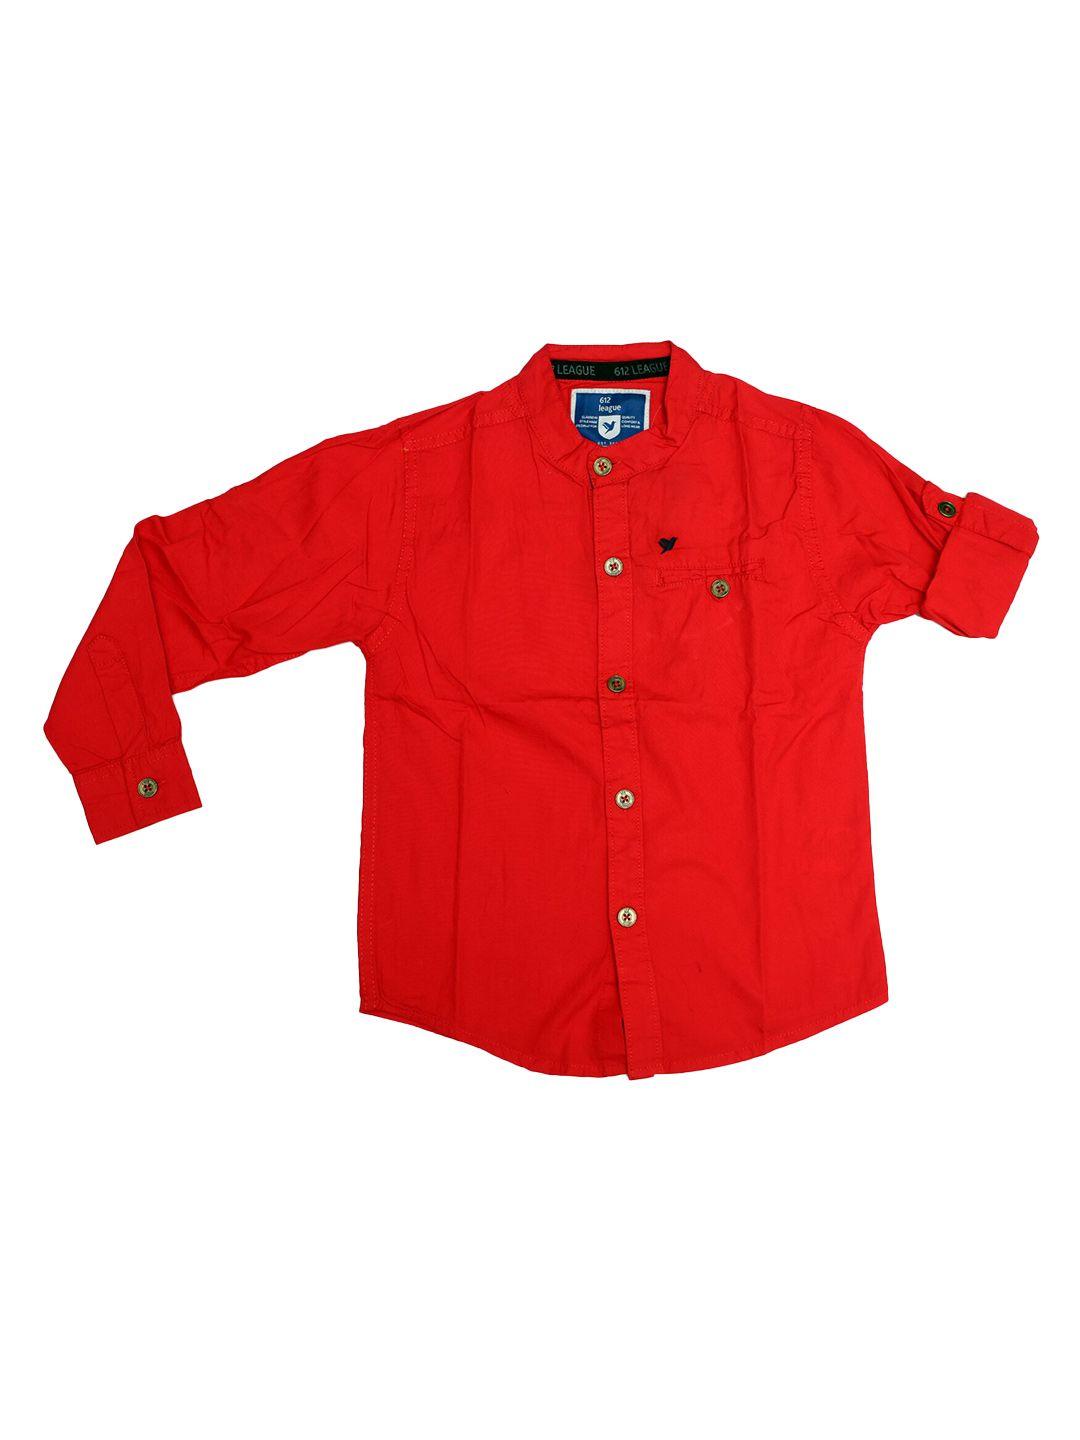 612league boys red classic opaque casual shirt